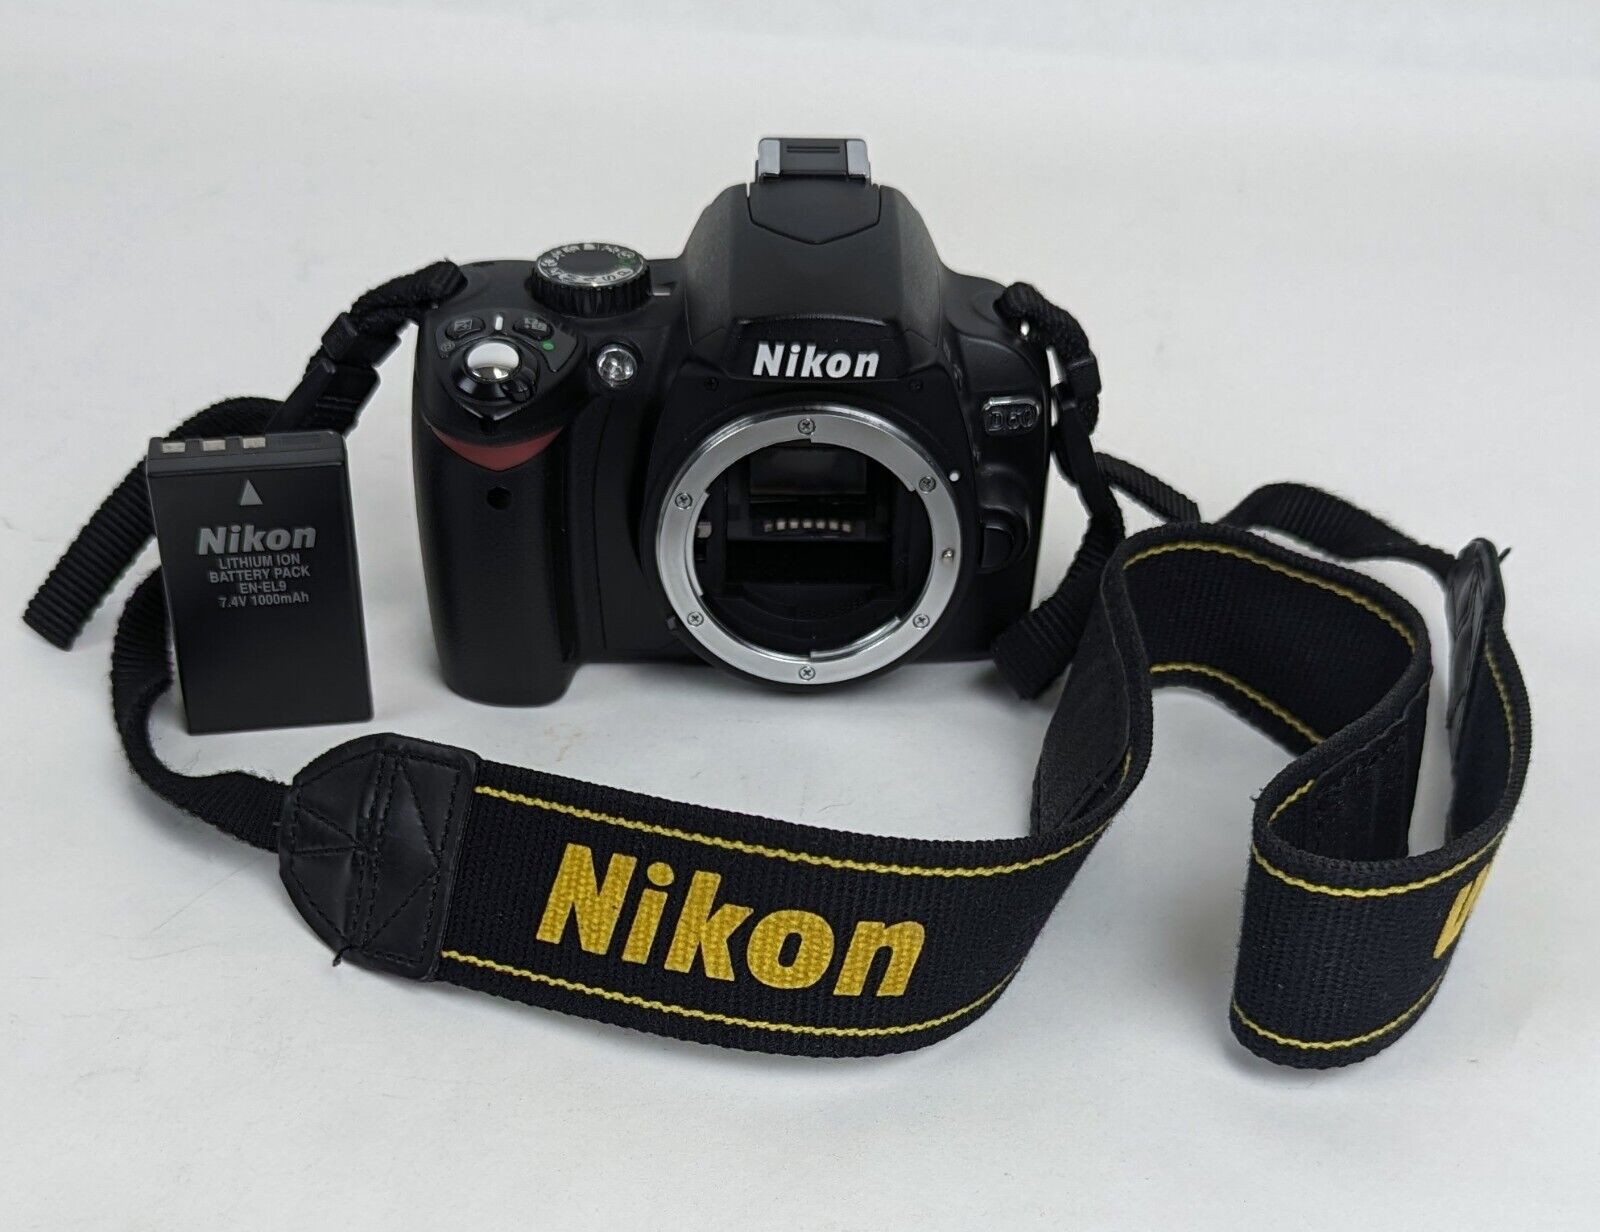 Nikon D60 - 10.2MP Digital SLR Camera - Body and Battery Only